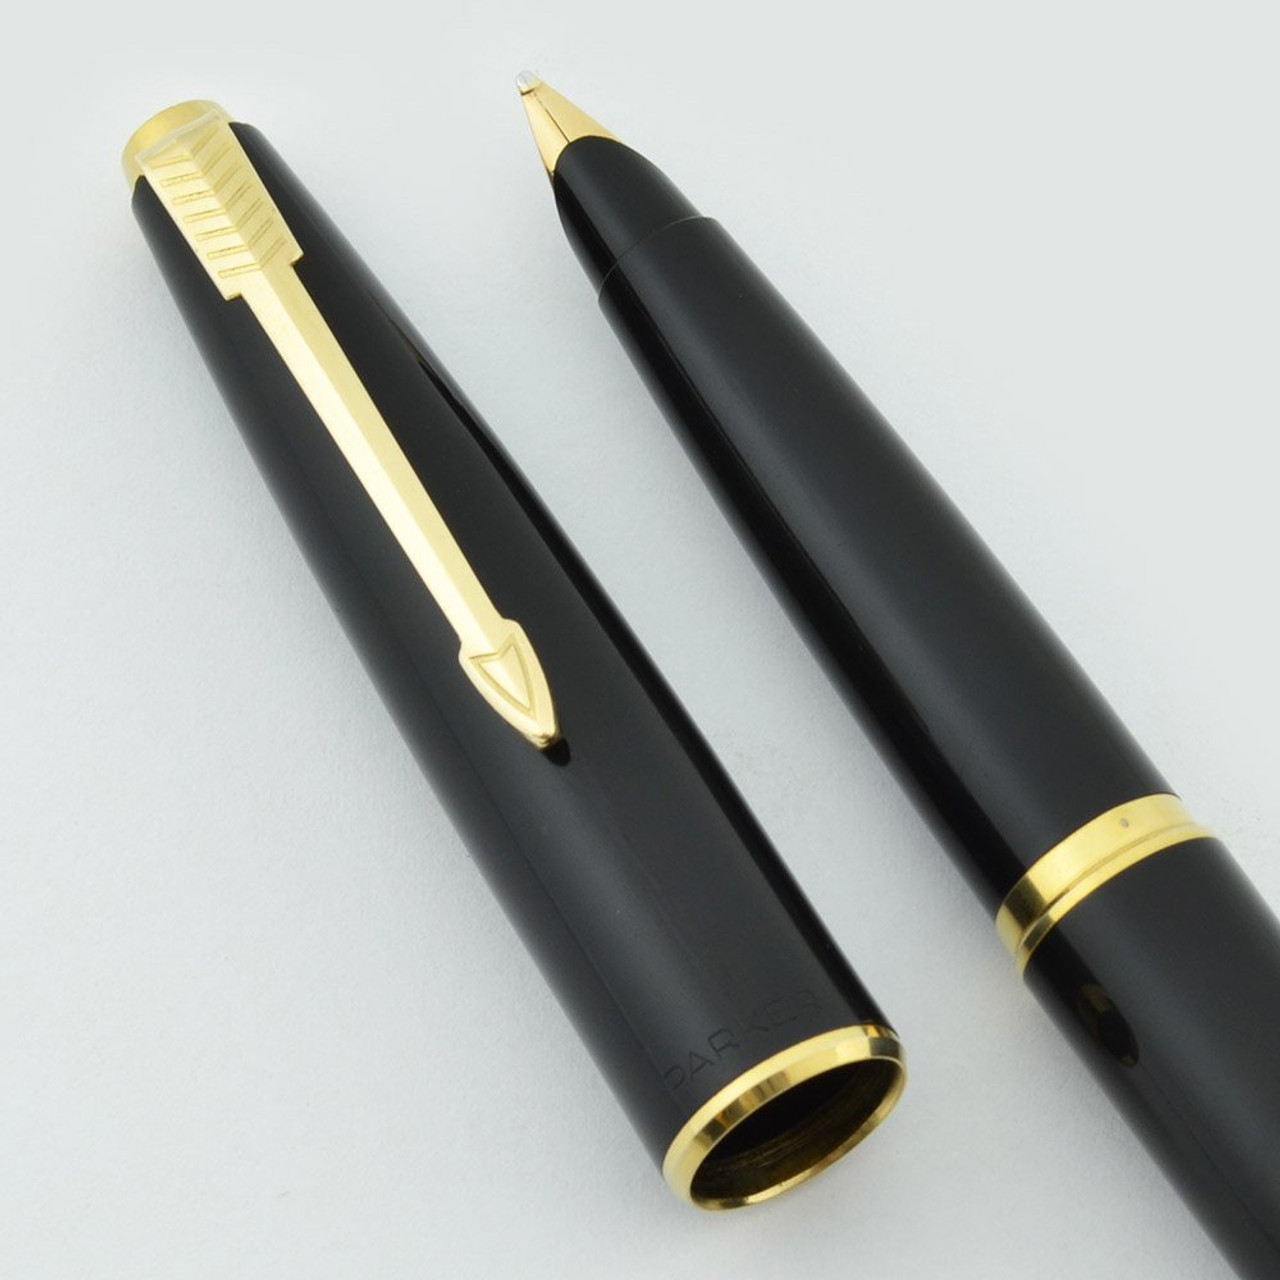 Parker 45 UK Fountain Pen - Black, GT, Broad 14k Nib (Very Nice, Works Well)